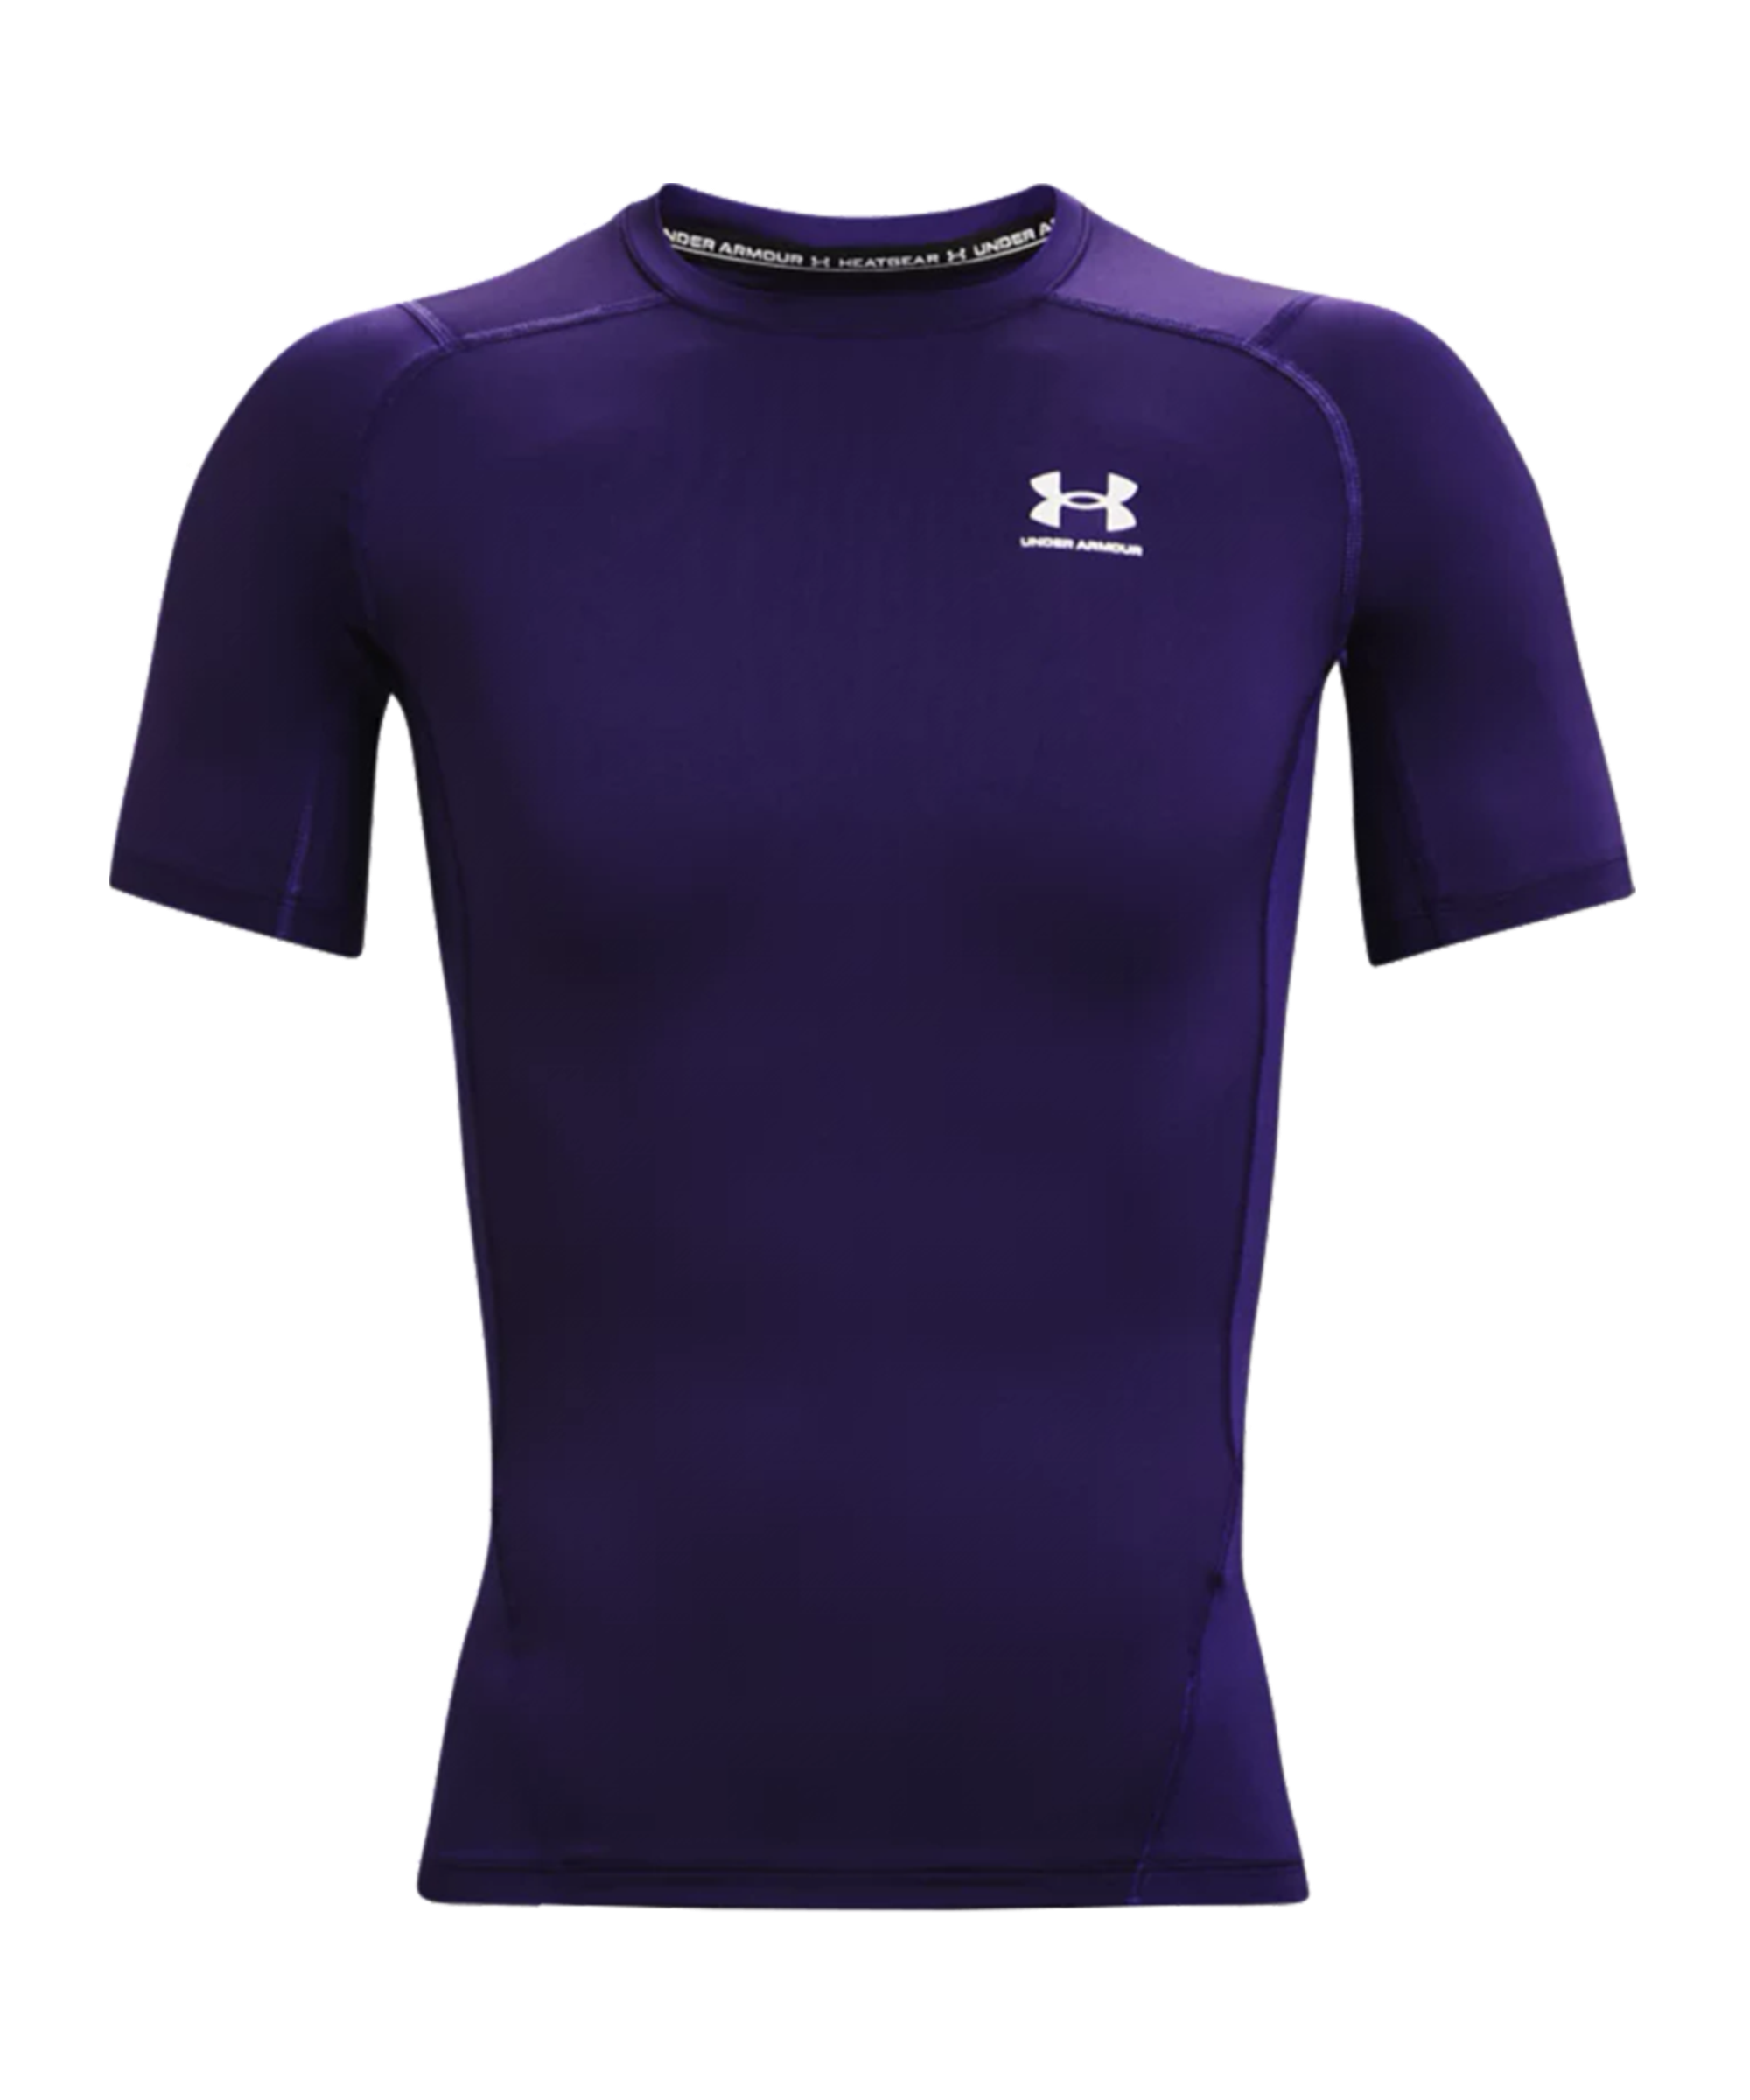 Under Armour HG Compression T-Shirt - purple